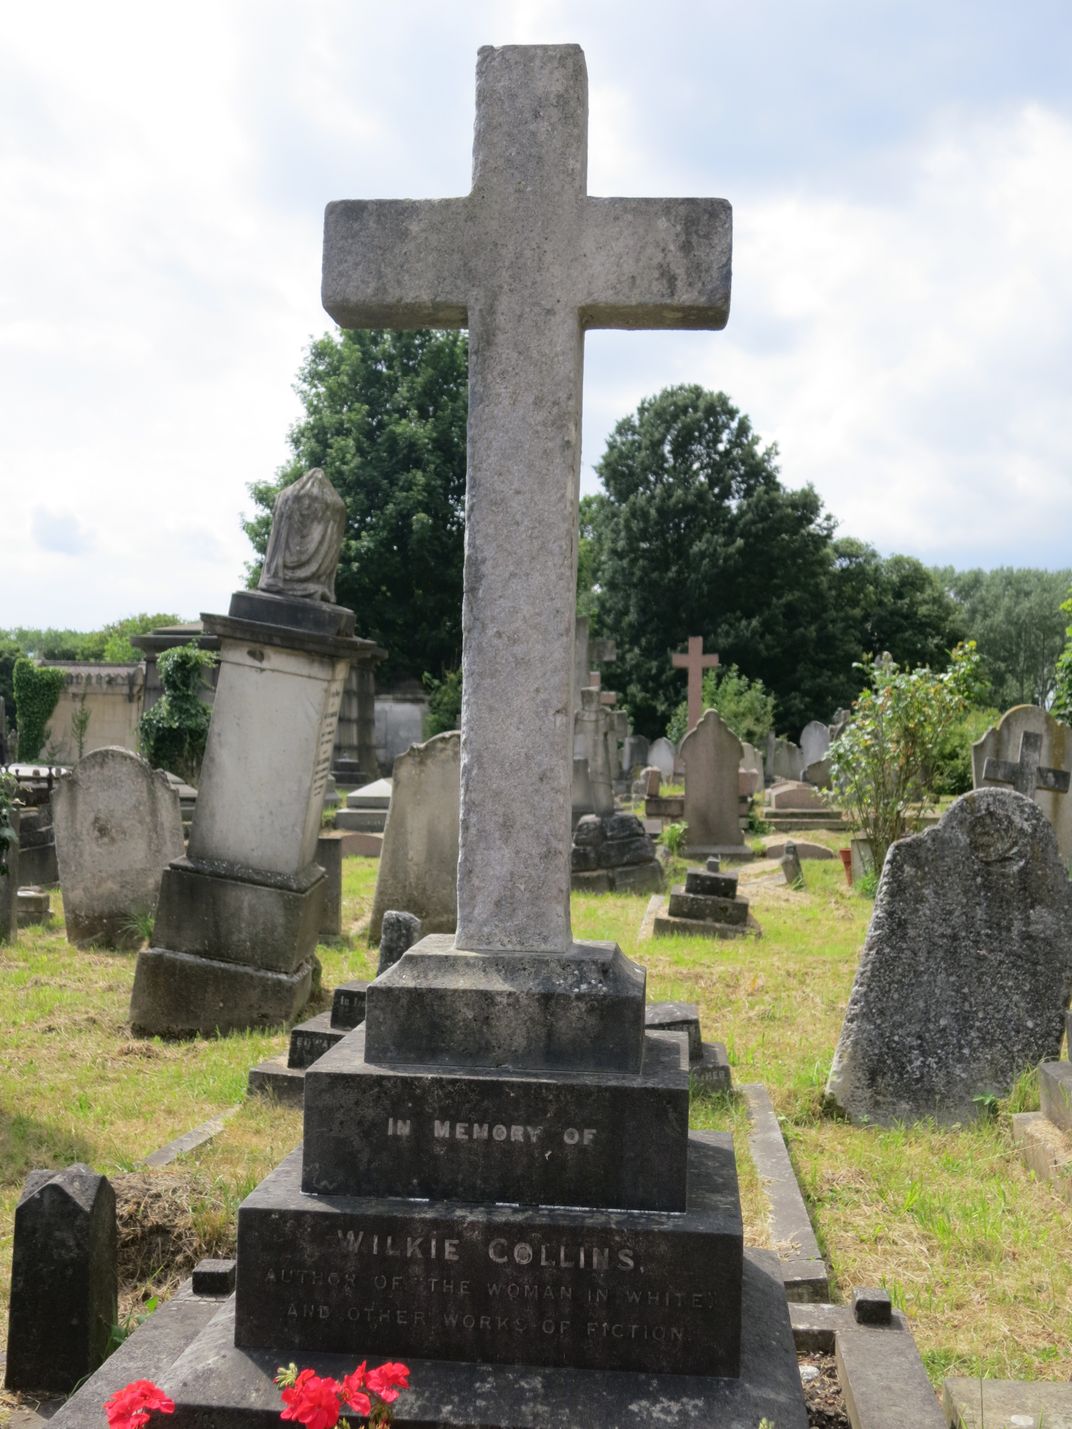 Wilkie Collins' grave